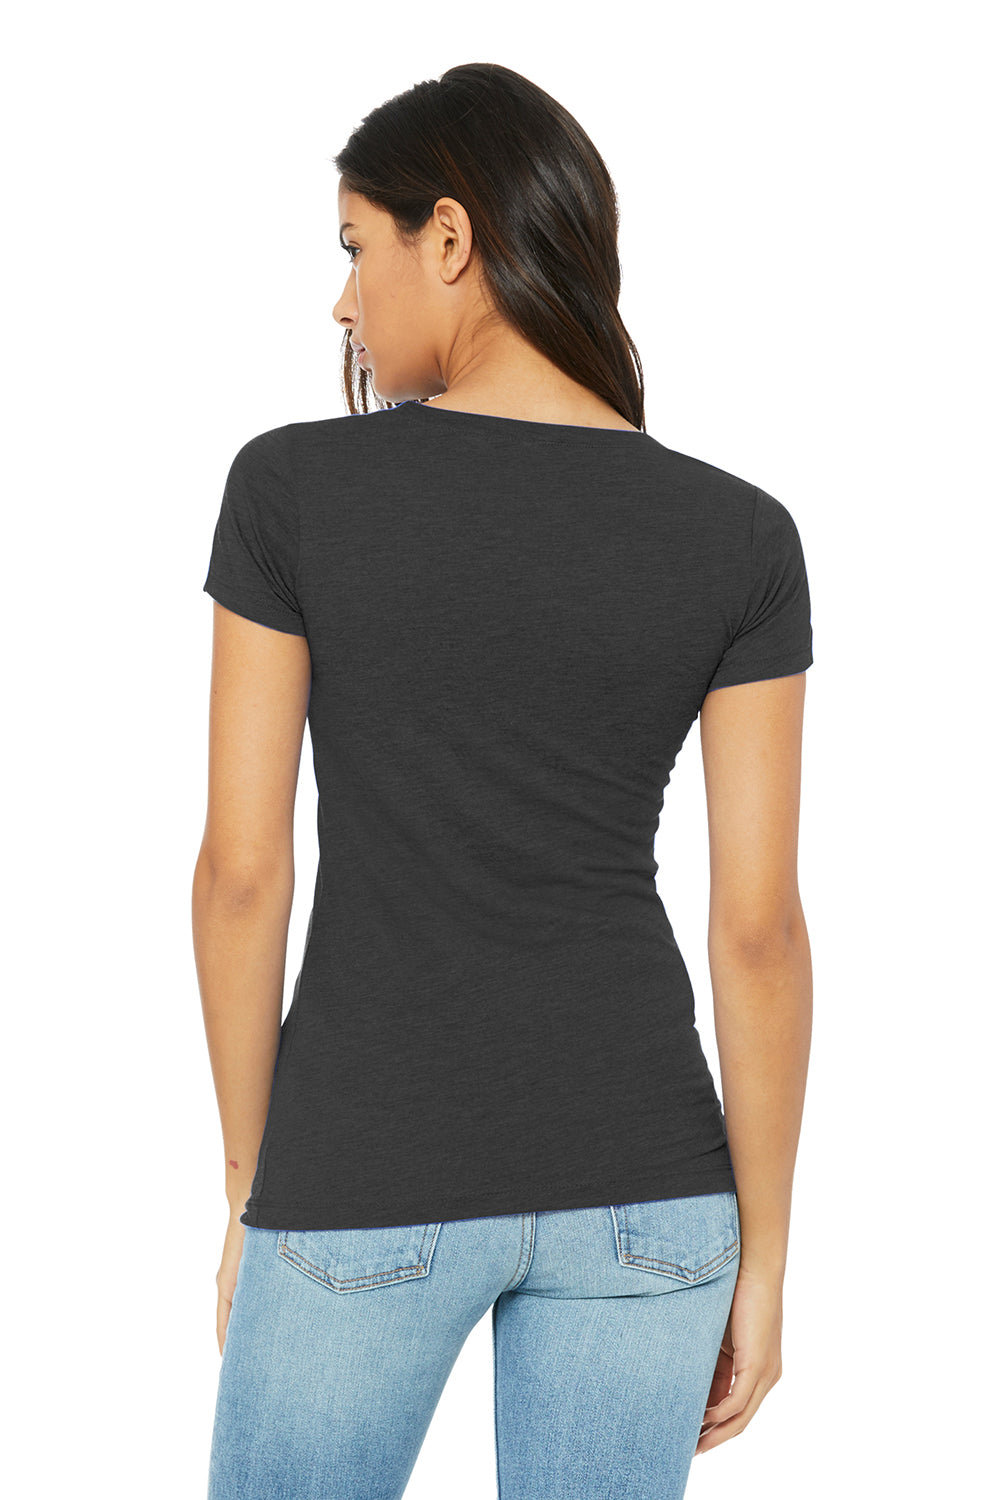 Bella + Canvas BC6004/6004 Womens The Favorite Short Sleeve Crewneck T-Shirt Asphalt Grey Model Back